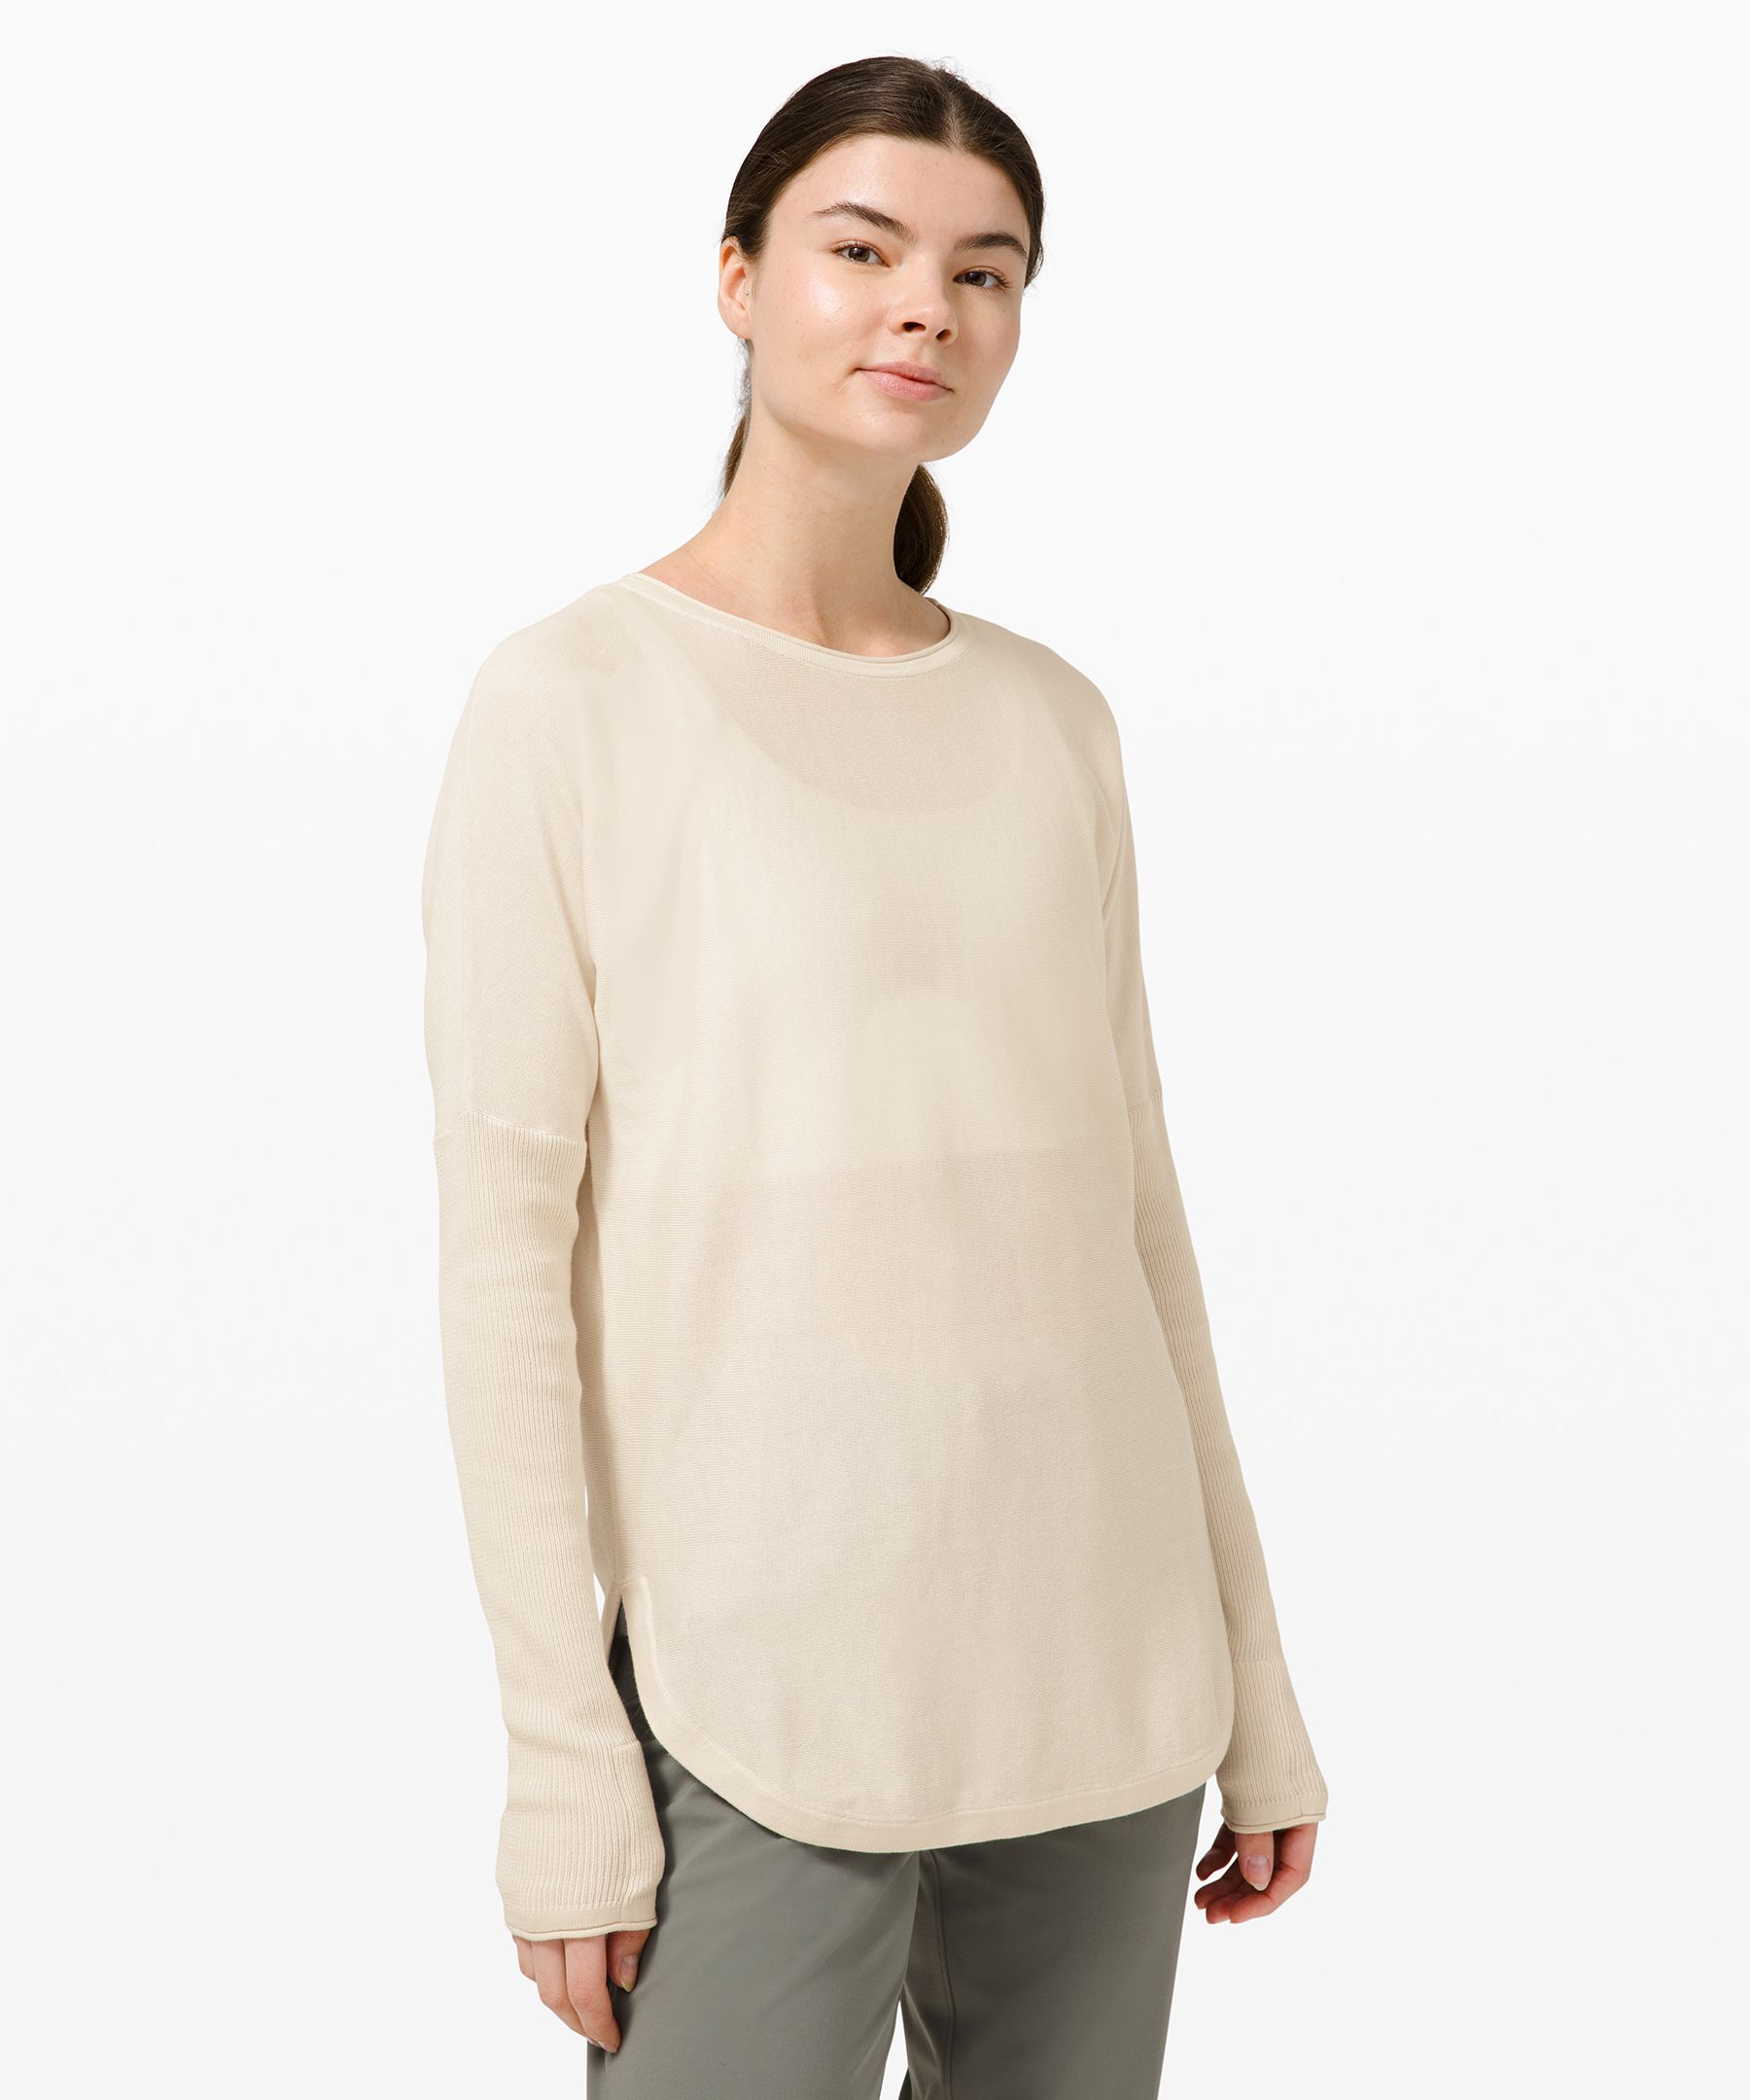 lululemon white sweater